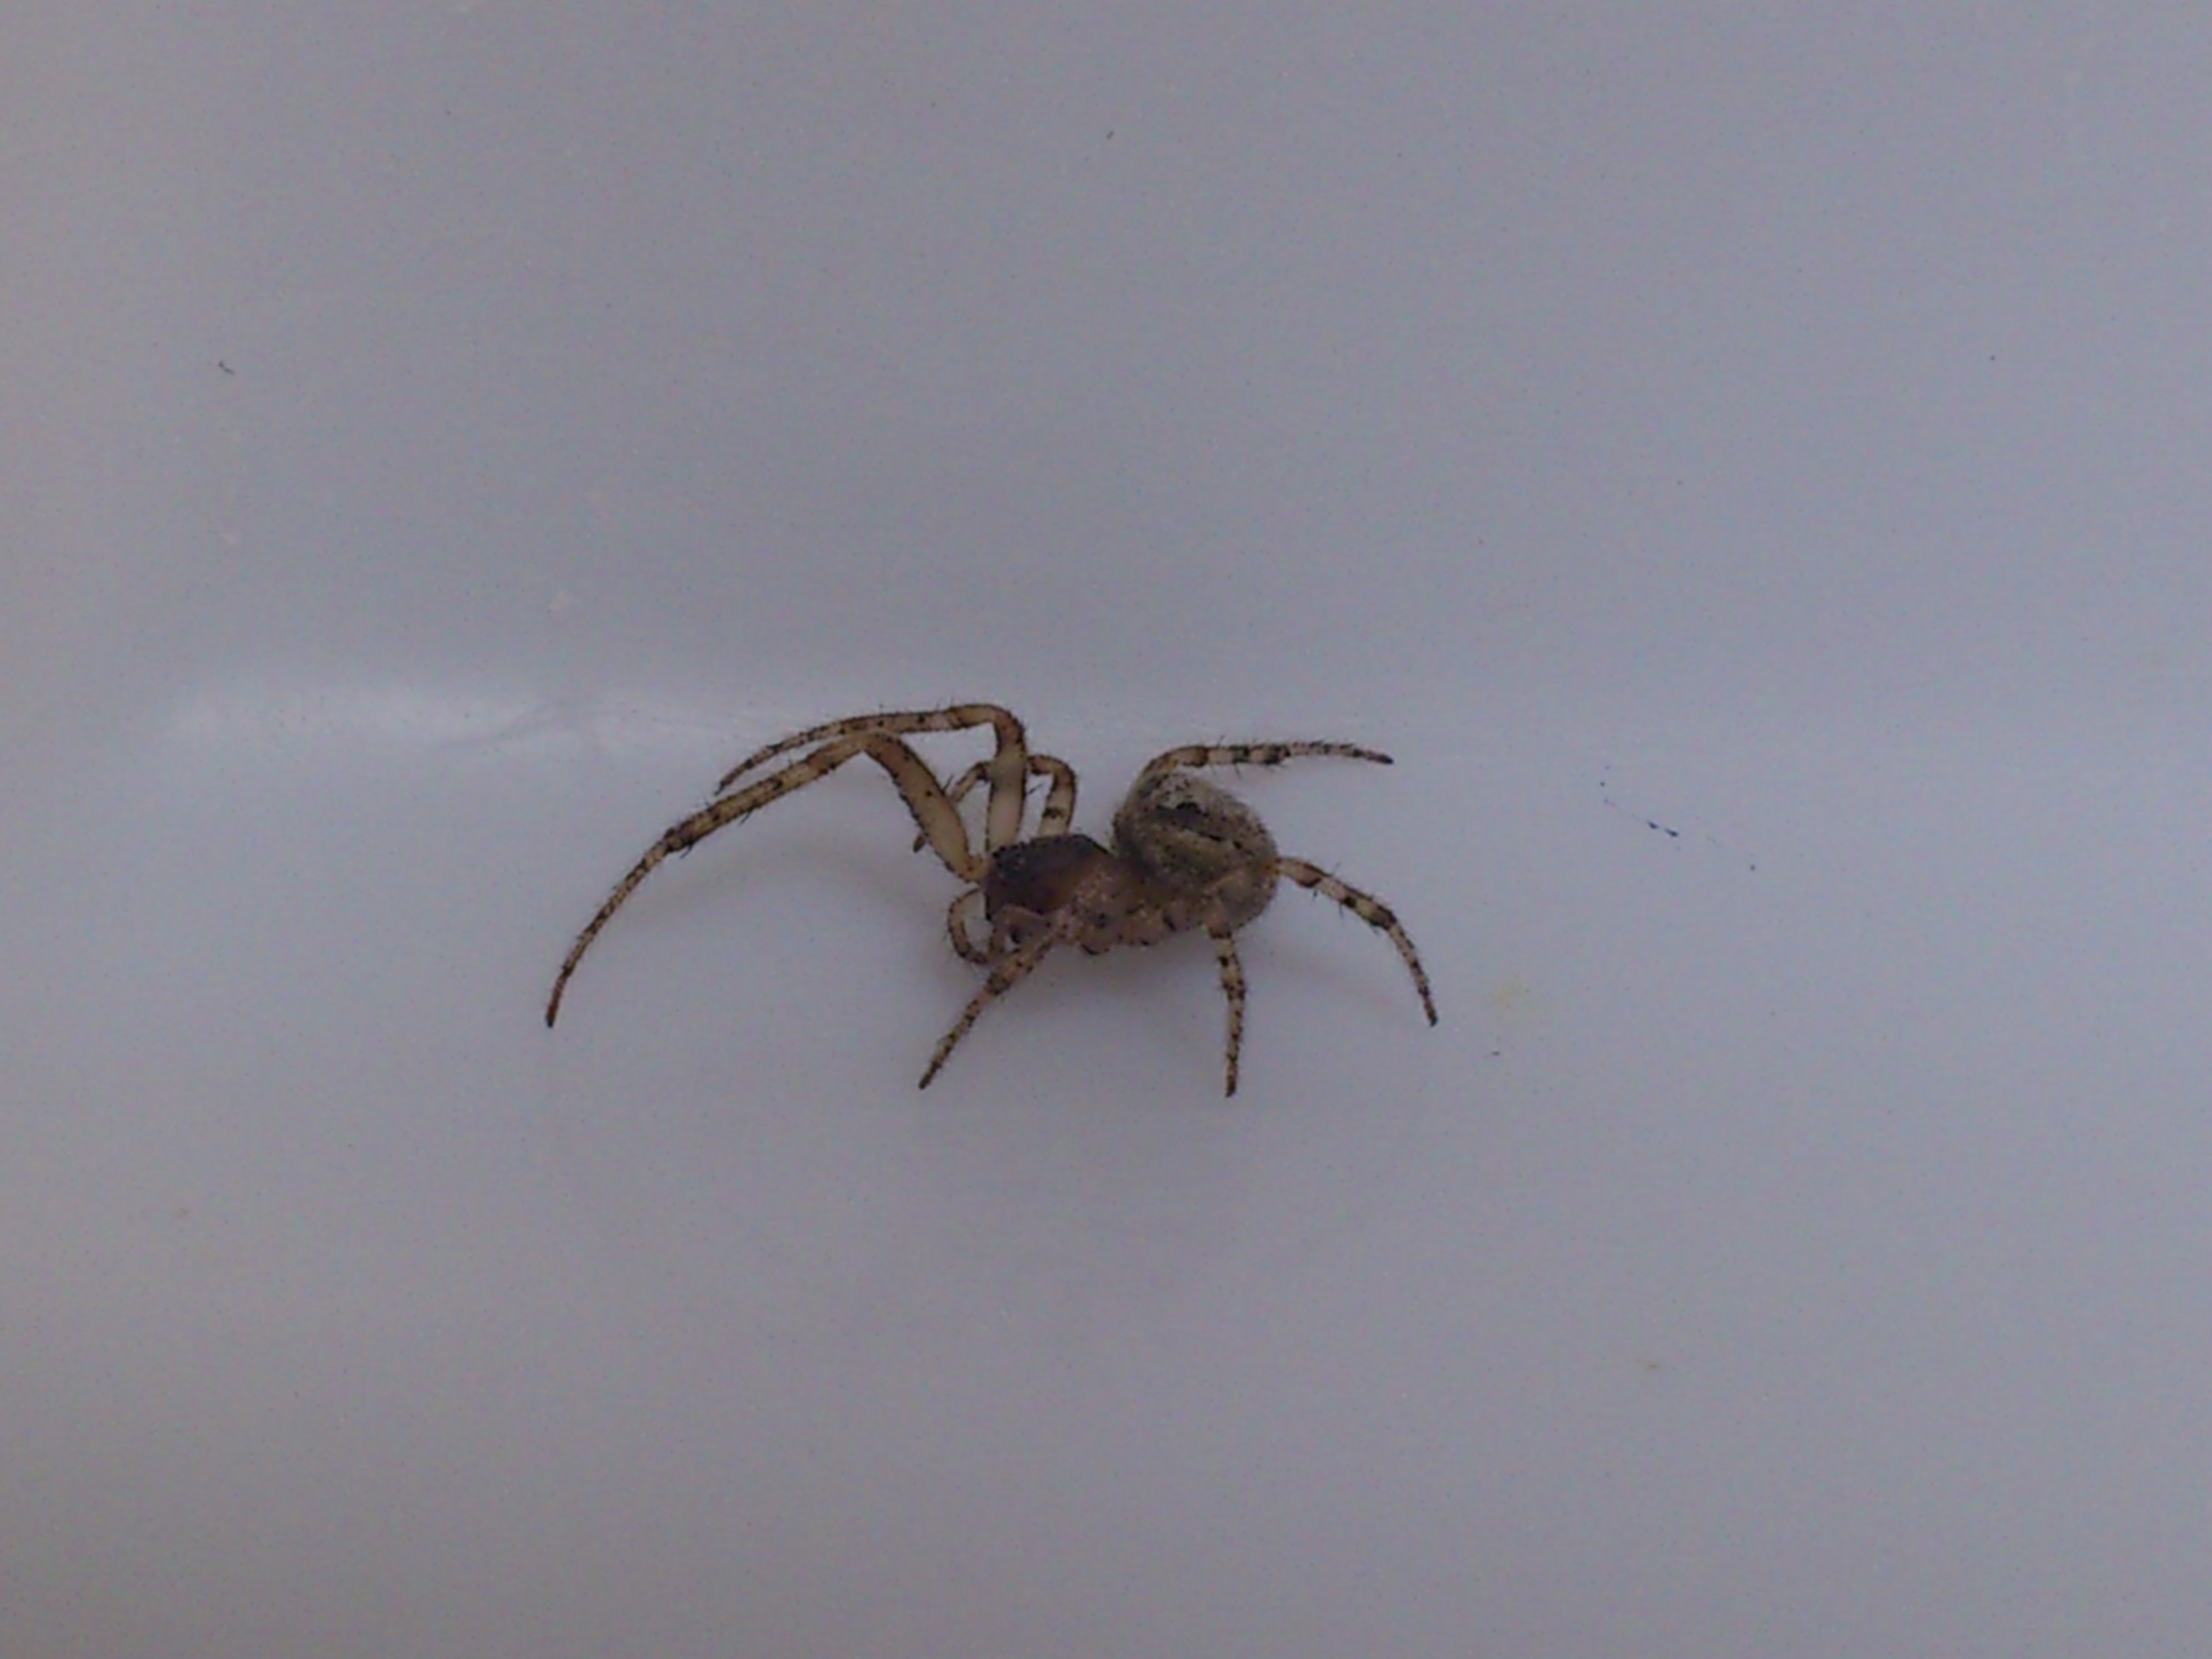 NaturePlus: Spider Found In Fridge?